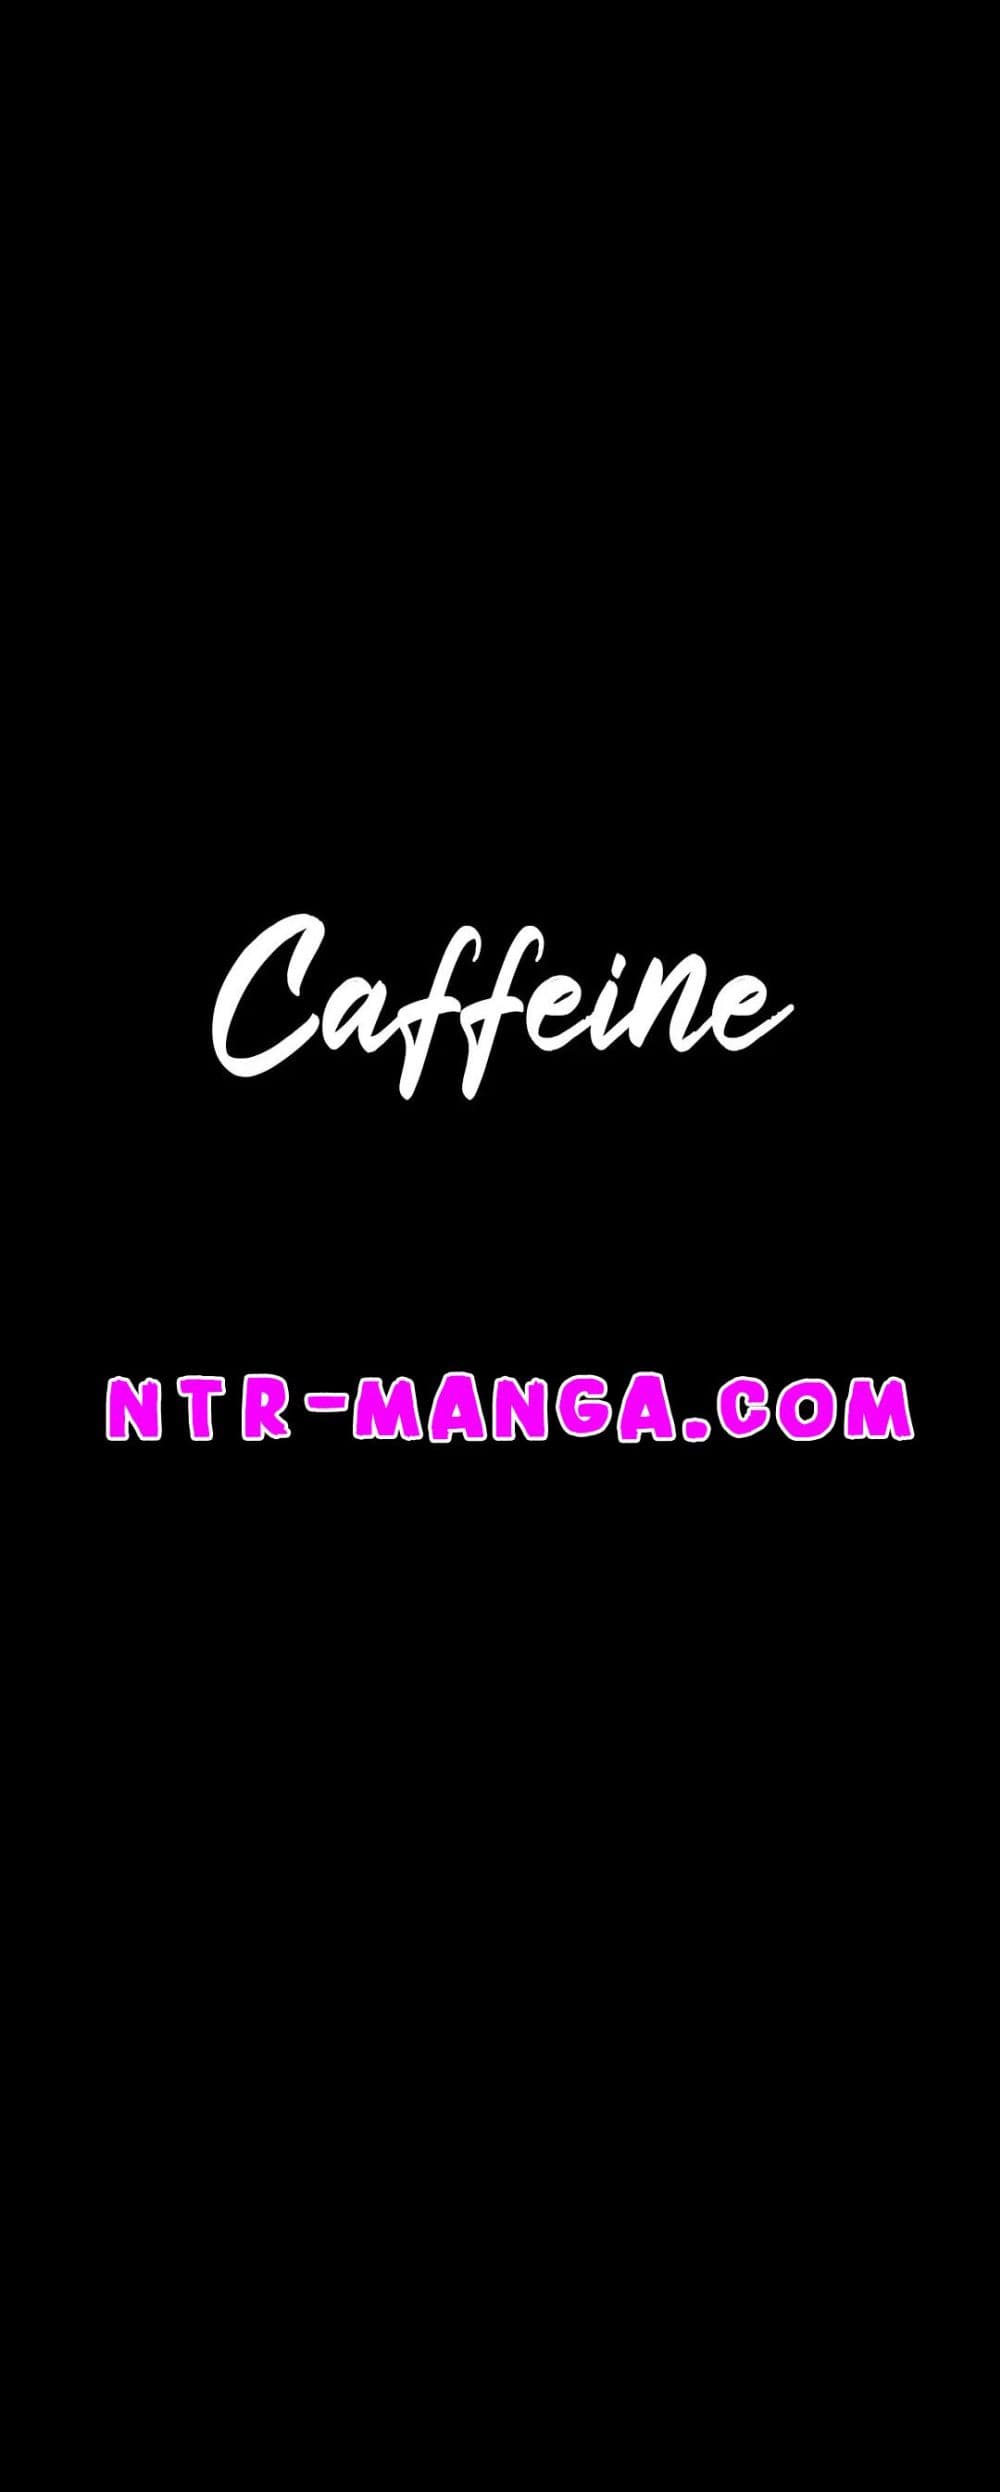 Caffeine 24-24